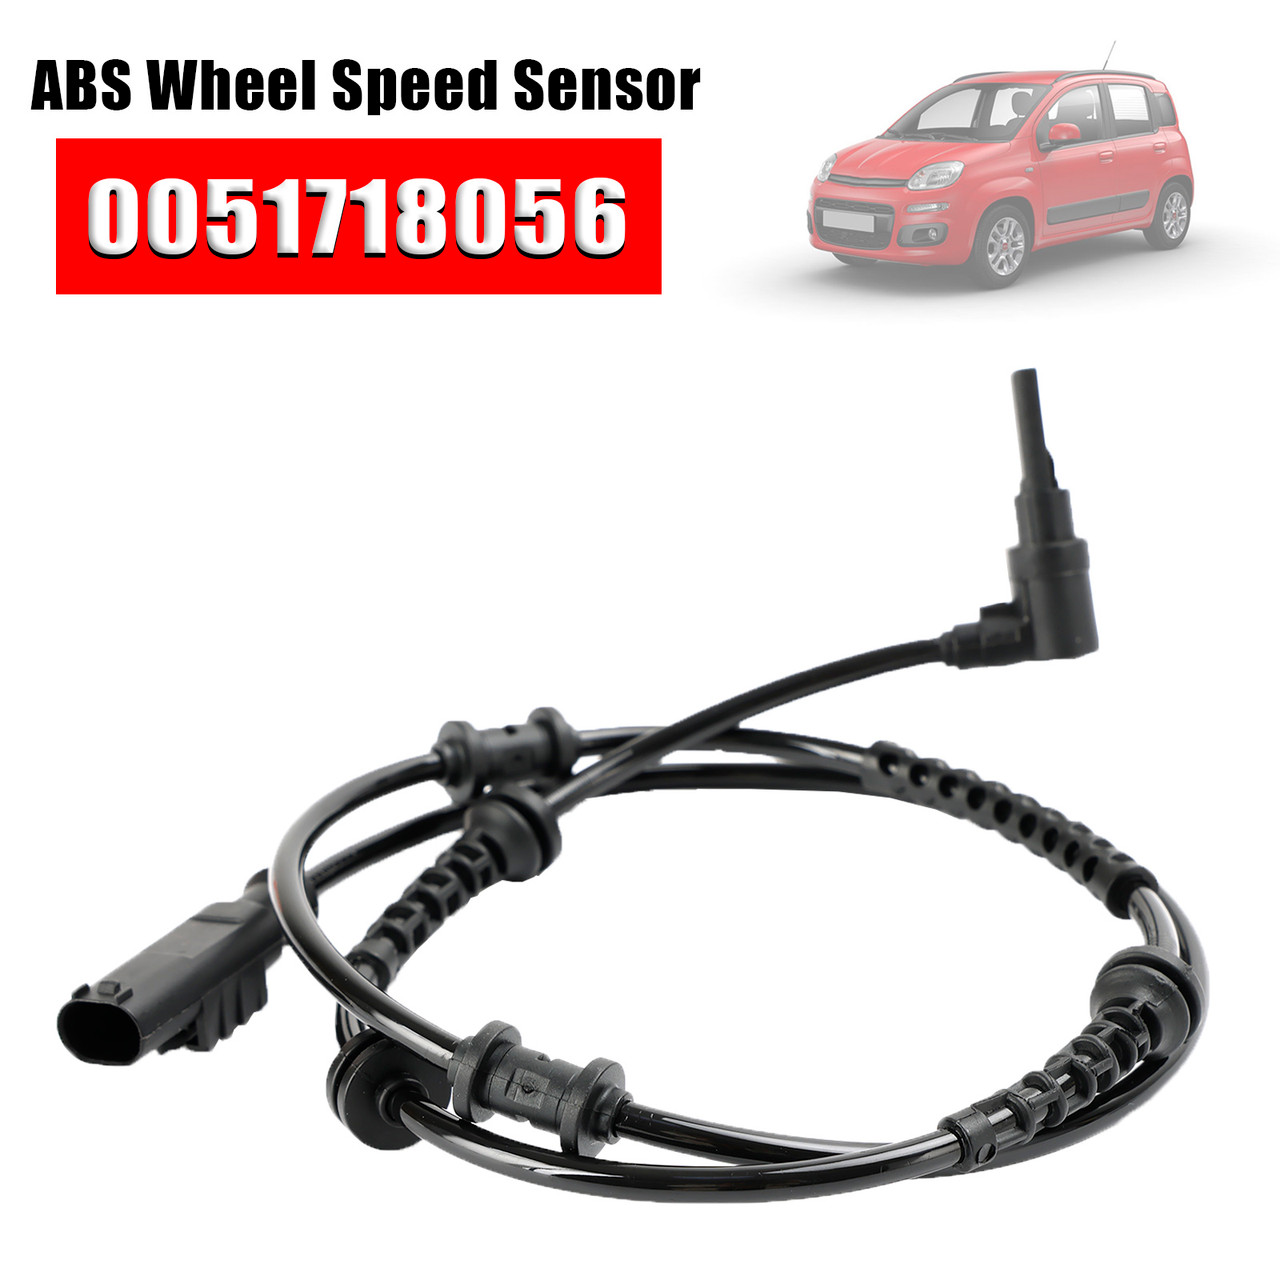 ABS Wheel Speed Sensor Front Left/Right For Fiat Panda 169 0051718056